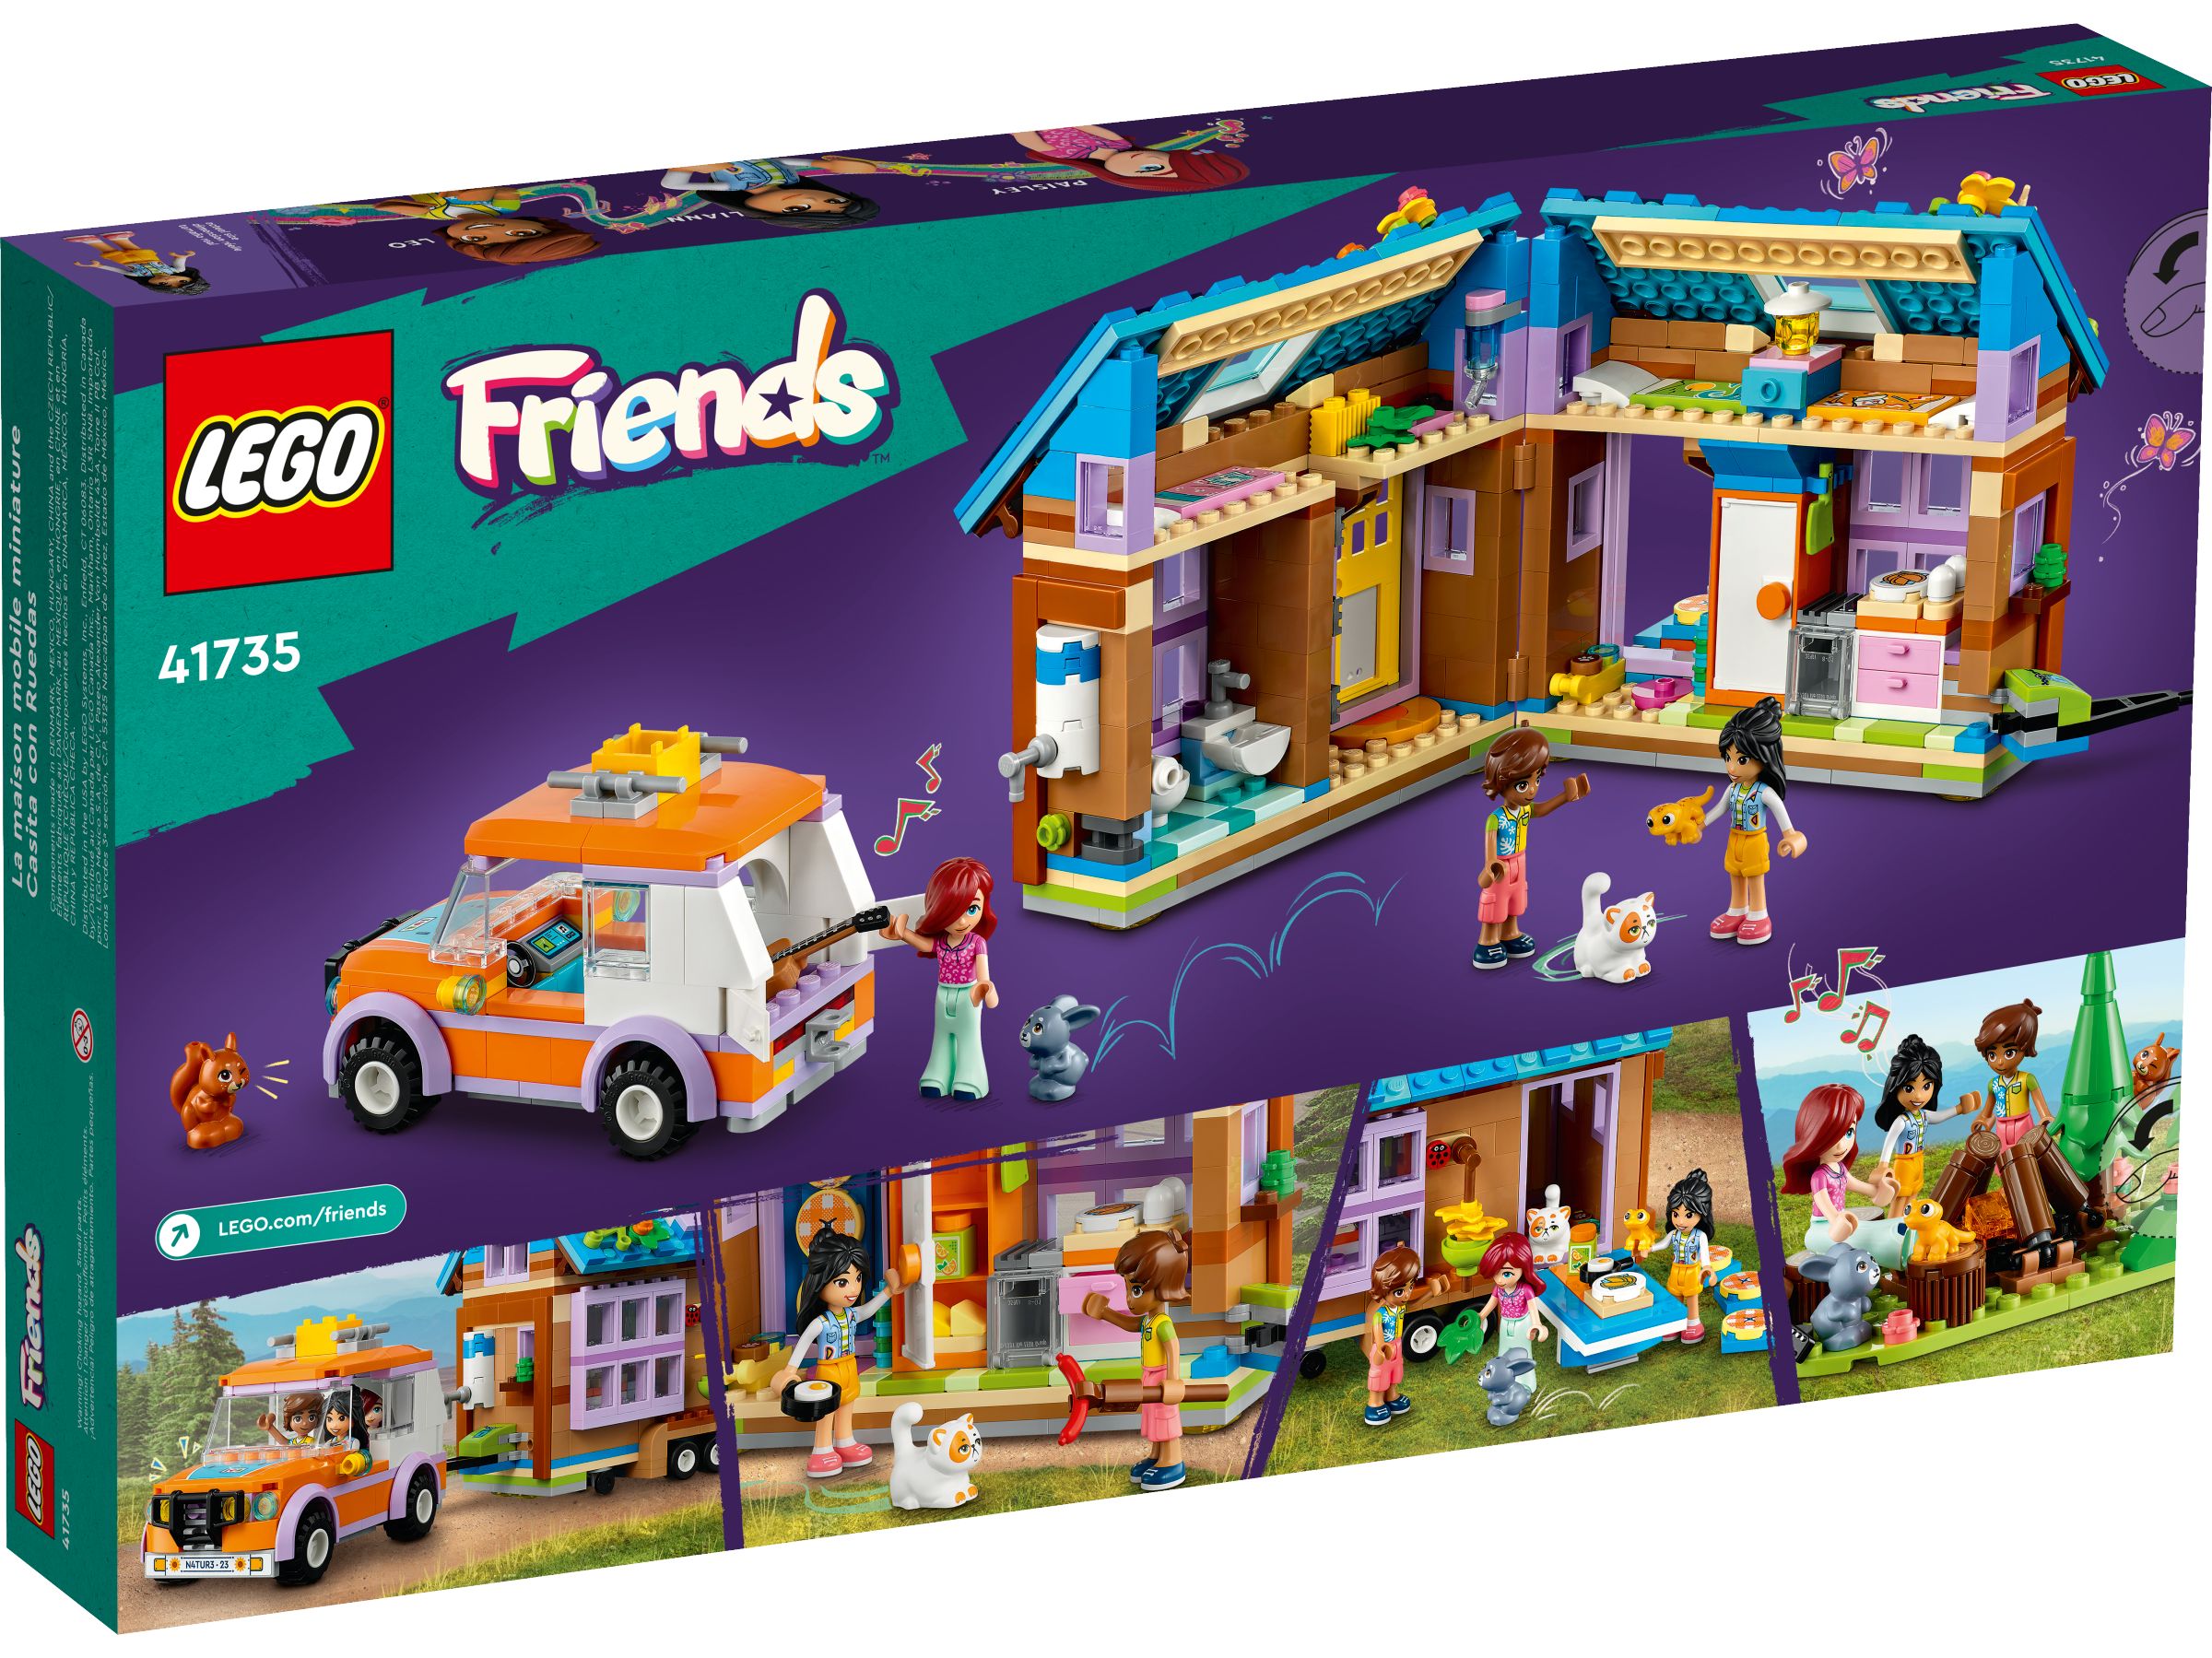 LEGO Friends 41735 Mobiles Haus LEGO_41735_alt9.jpg